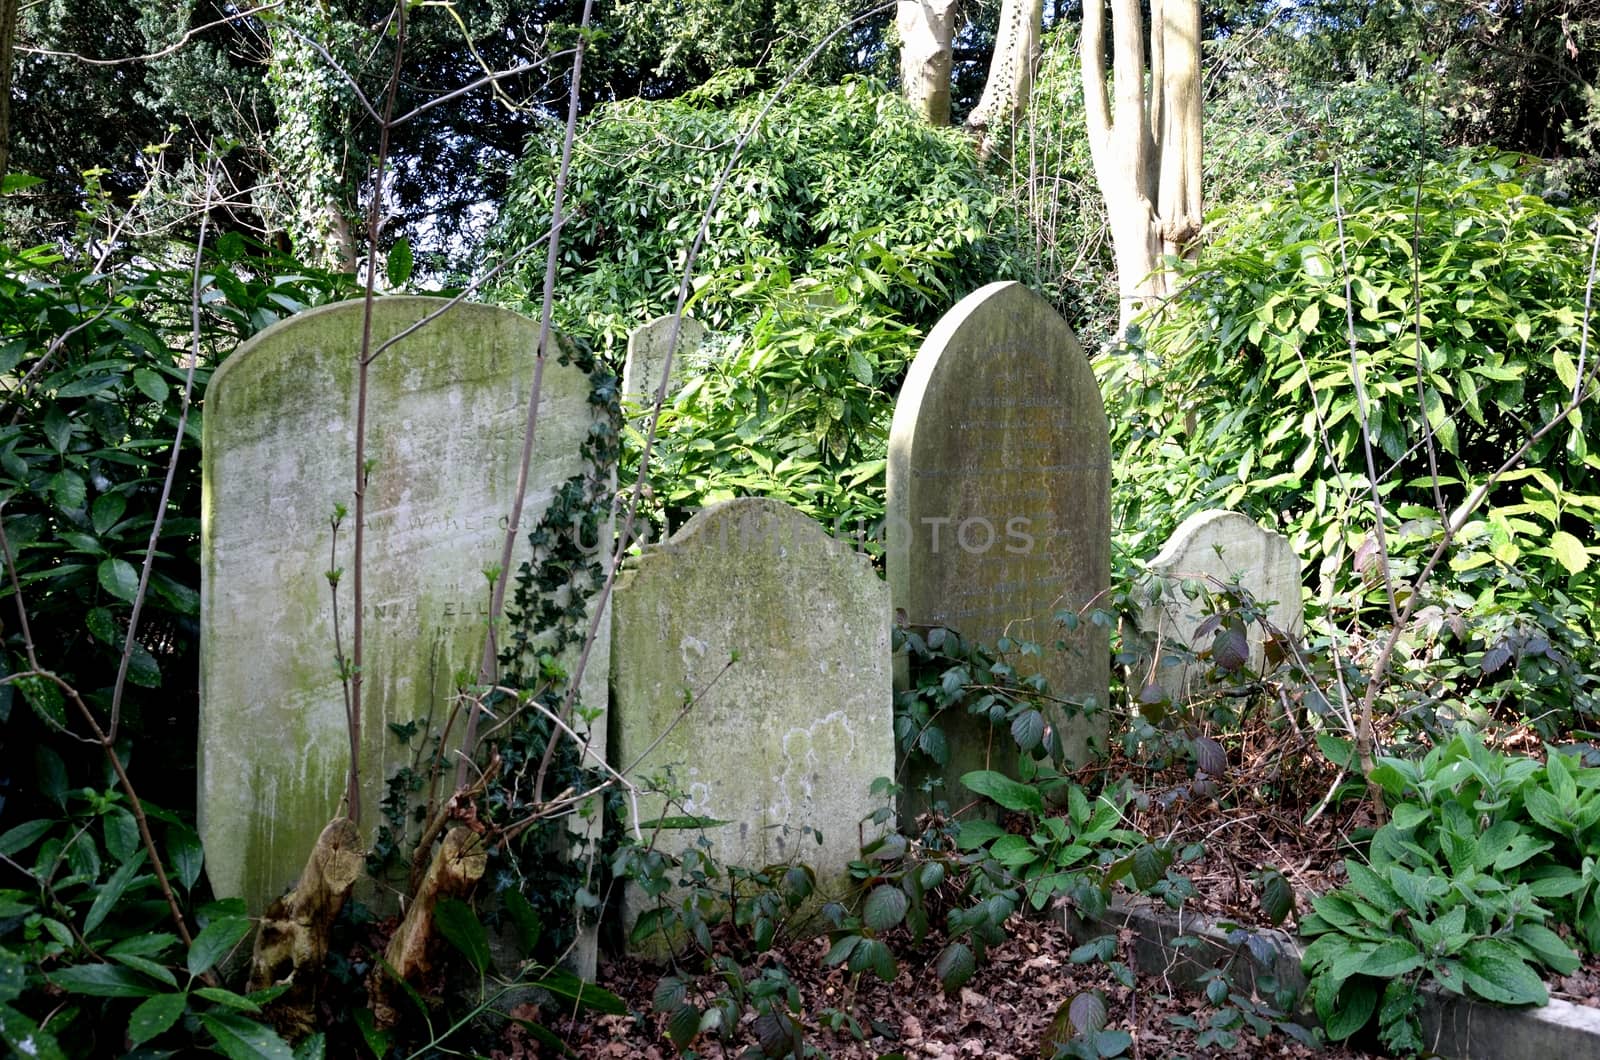 Trree Gravestones in English graveyard